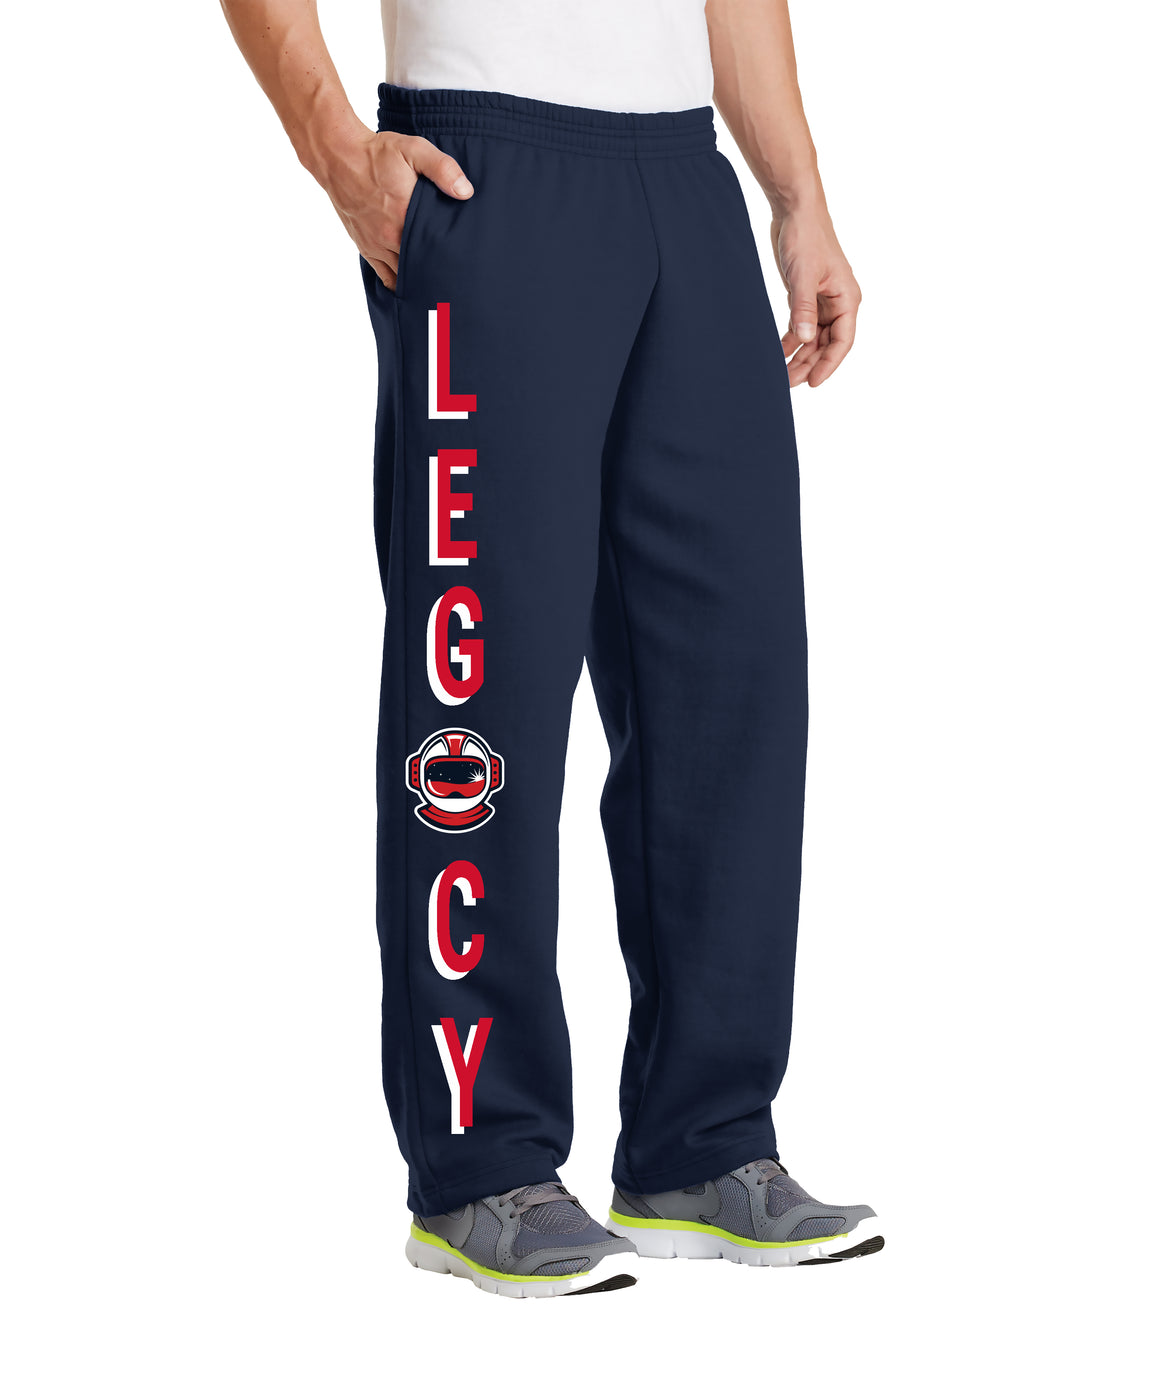 *New* - Legacy Online Academy - Sweatpants